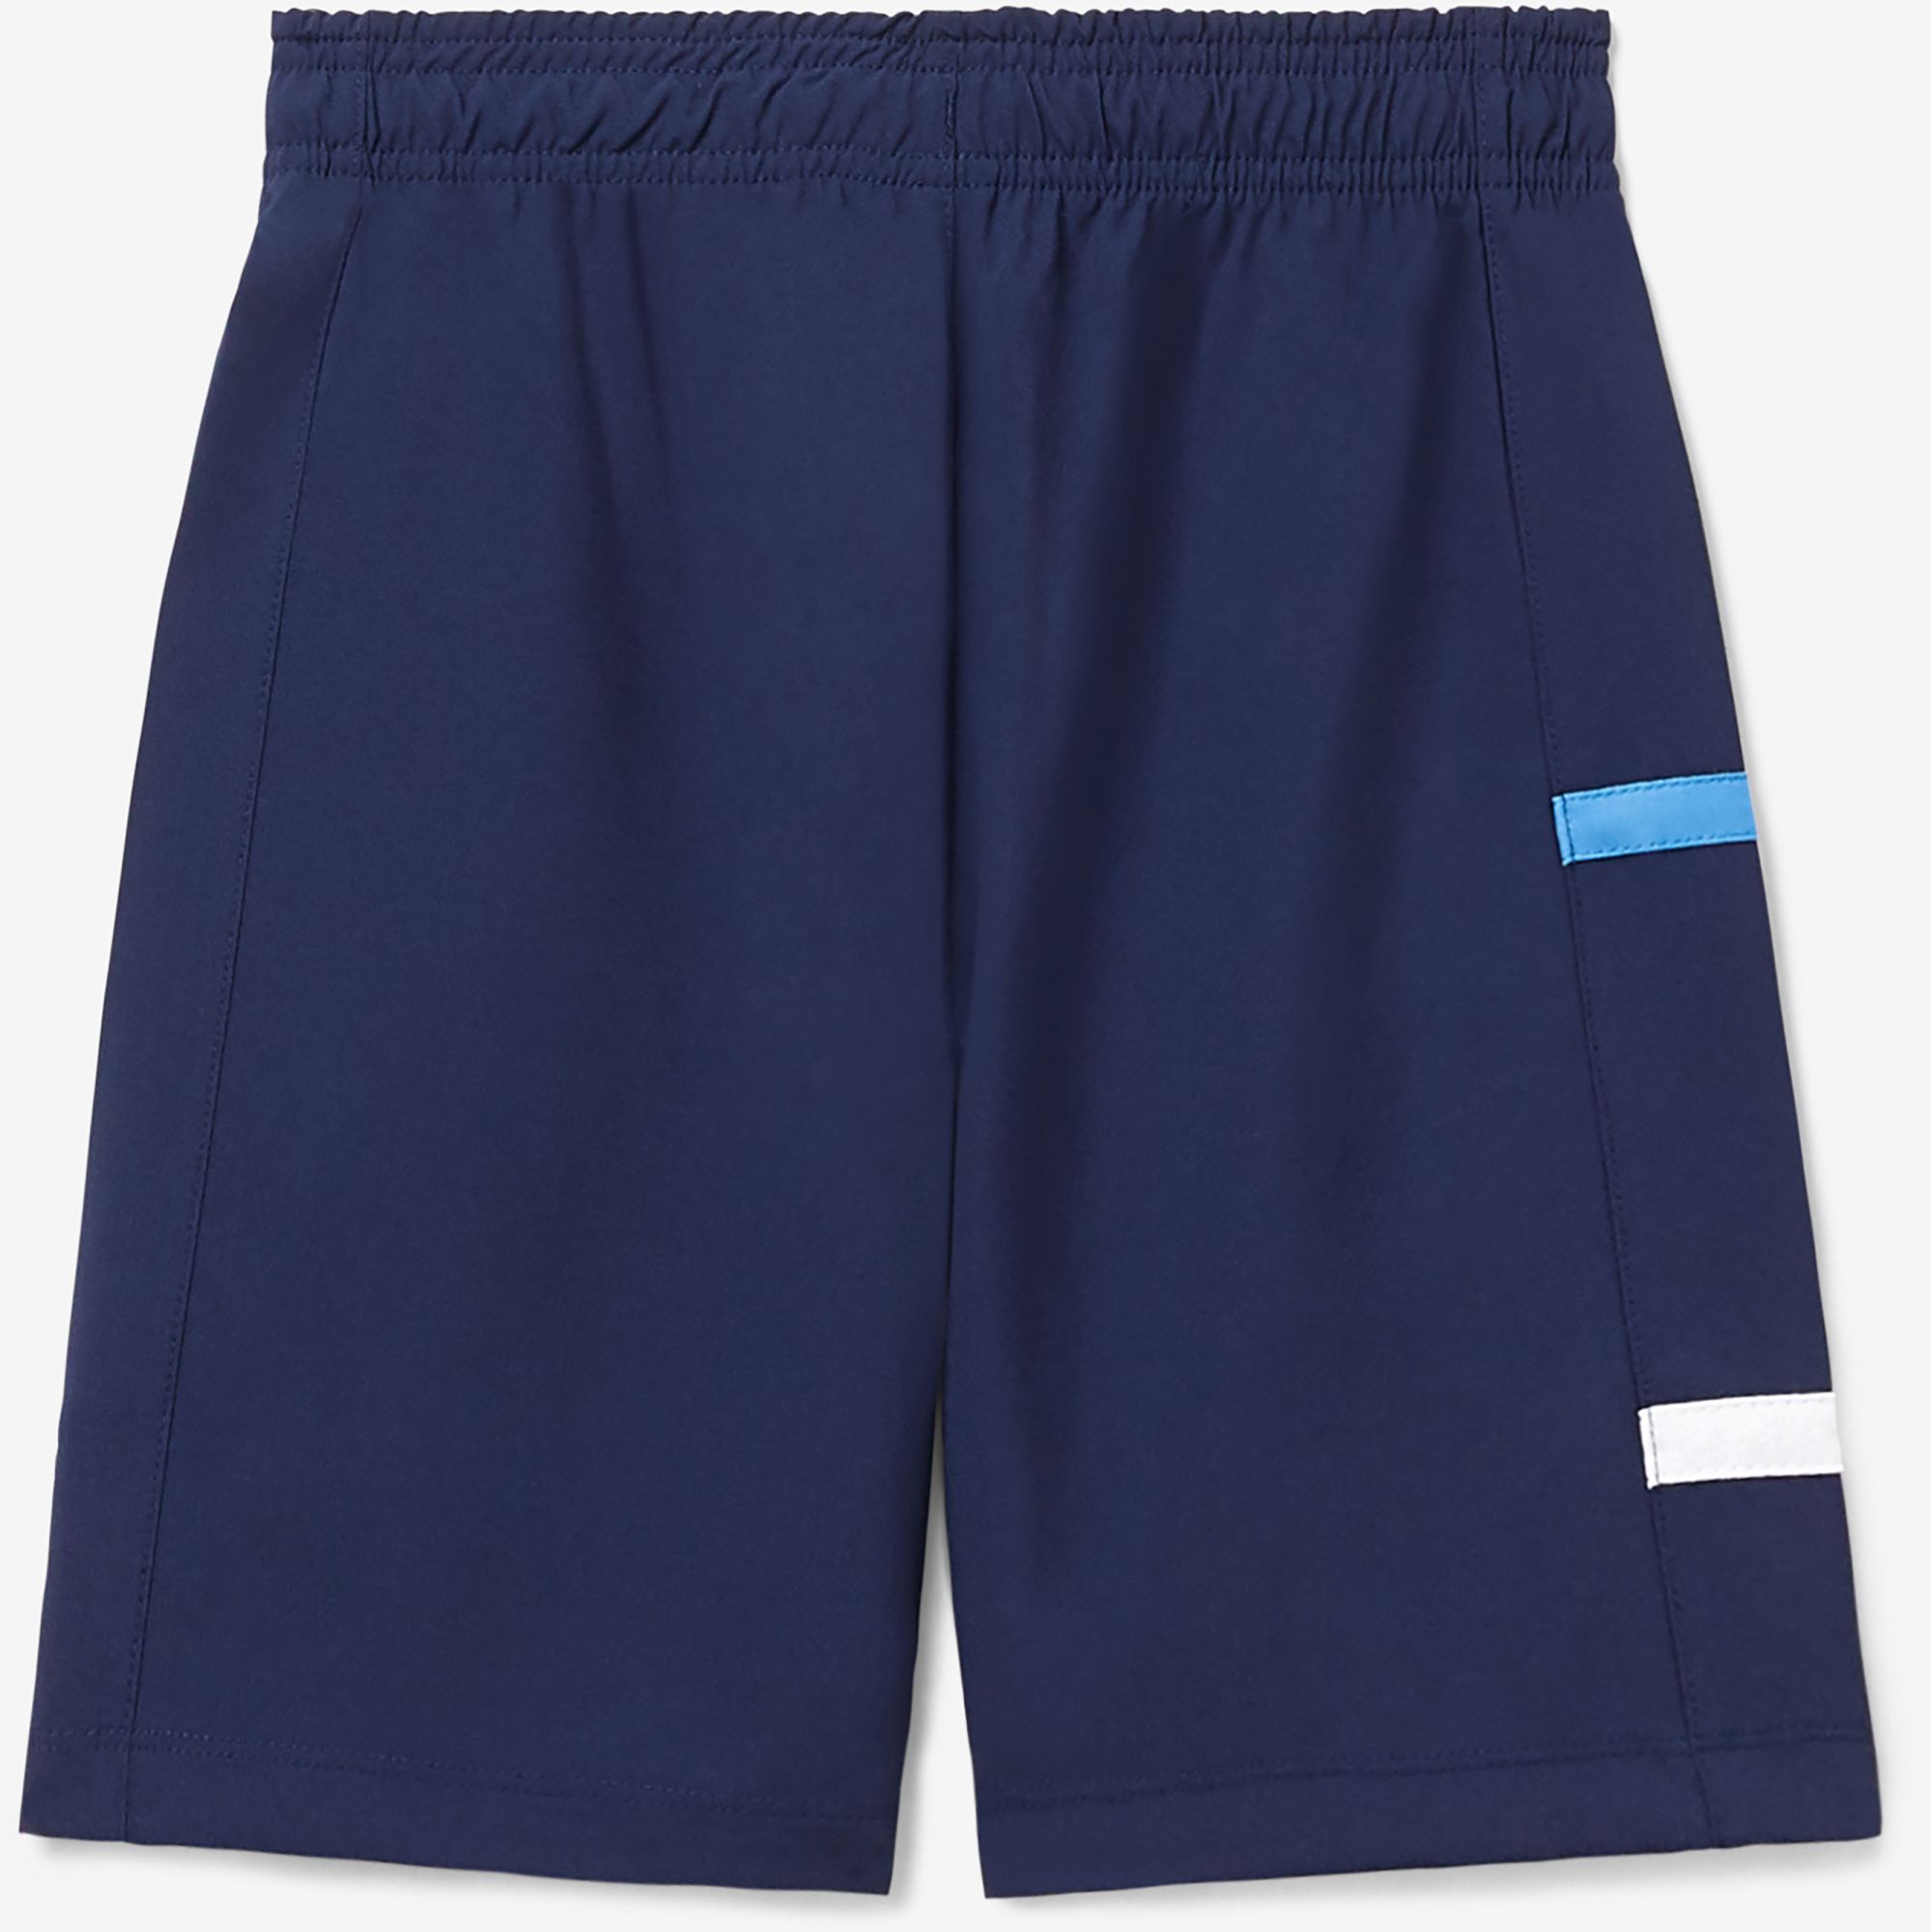 FILA Boys' Core Tennis Shorts